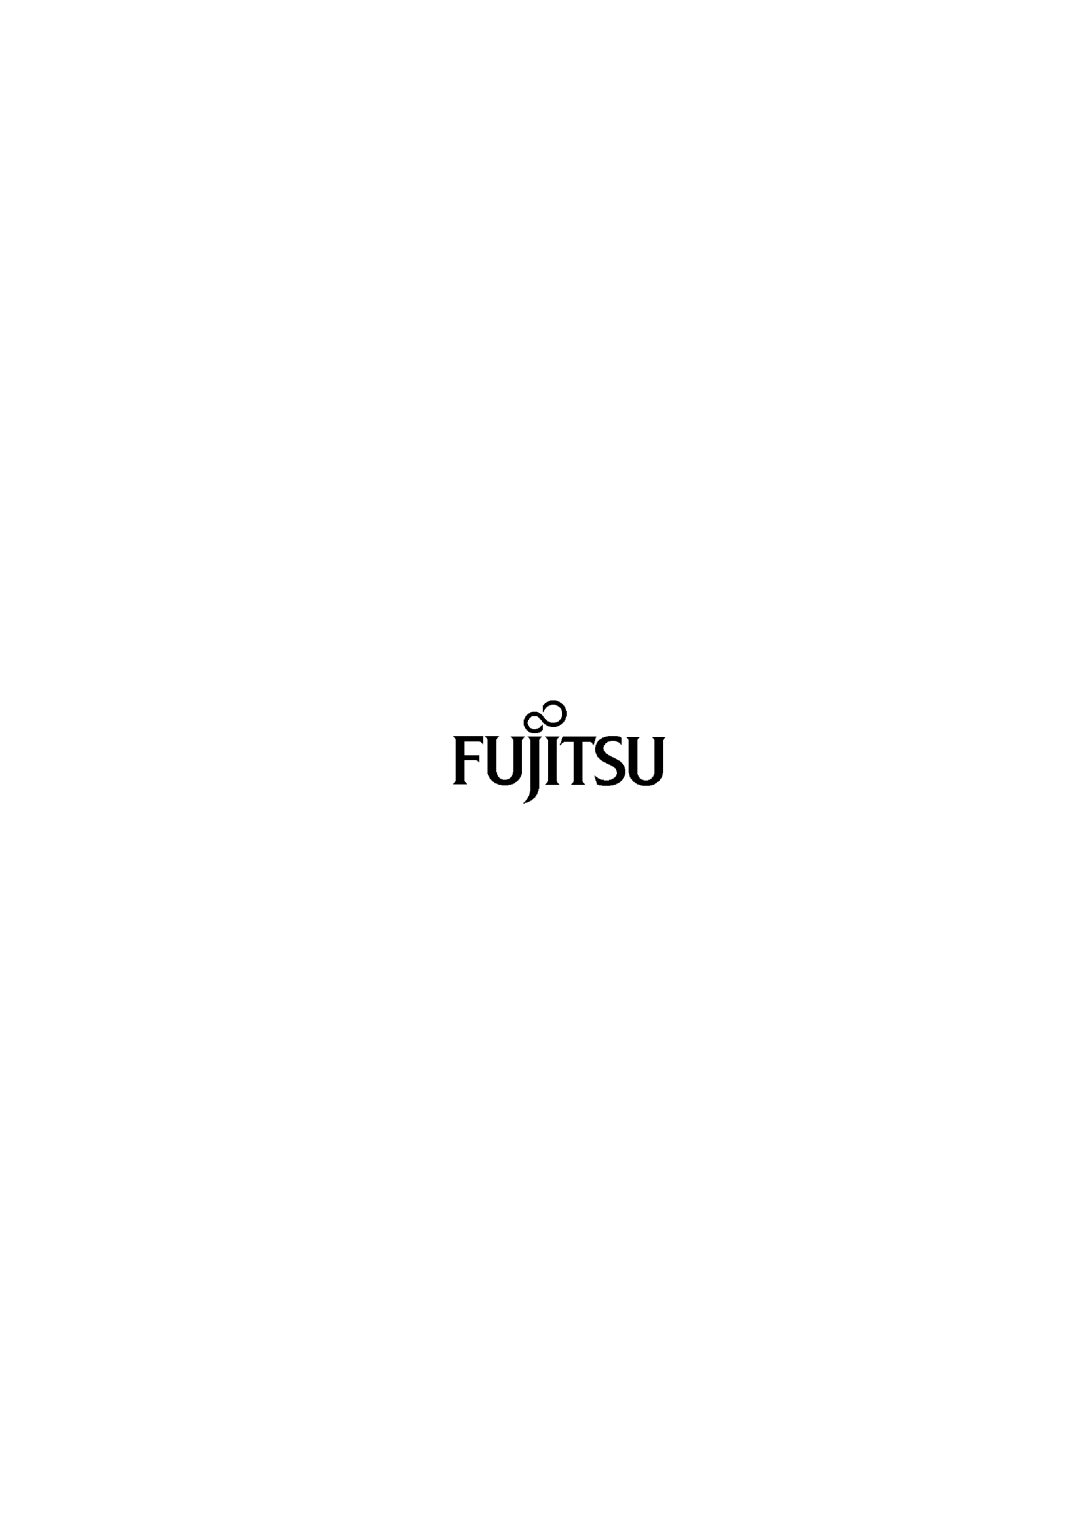 Fujitsu C150-E194-01EN manual 